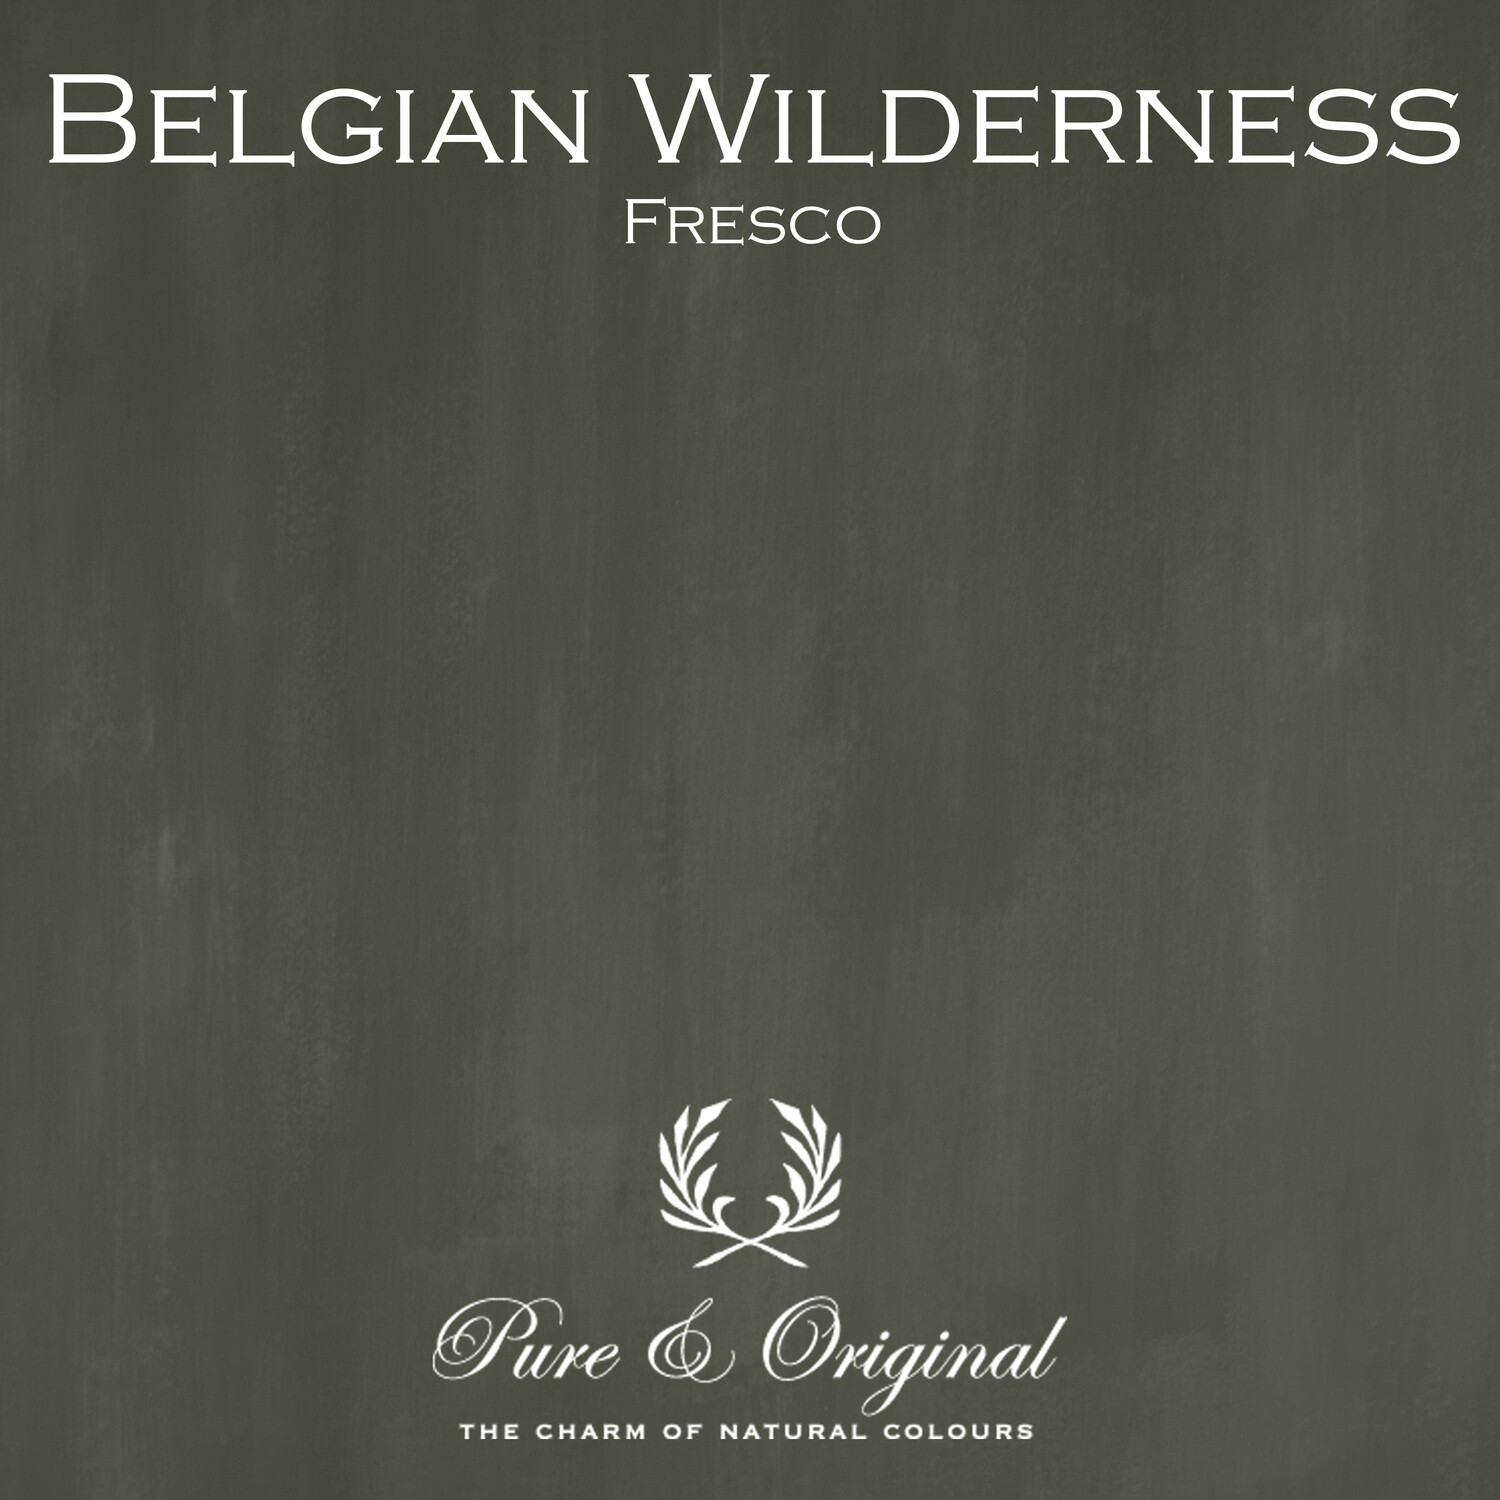 Belgian Wilderness Fresco